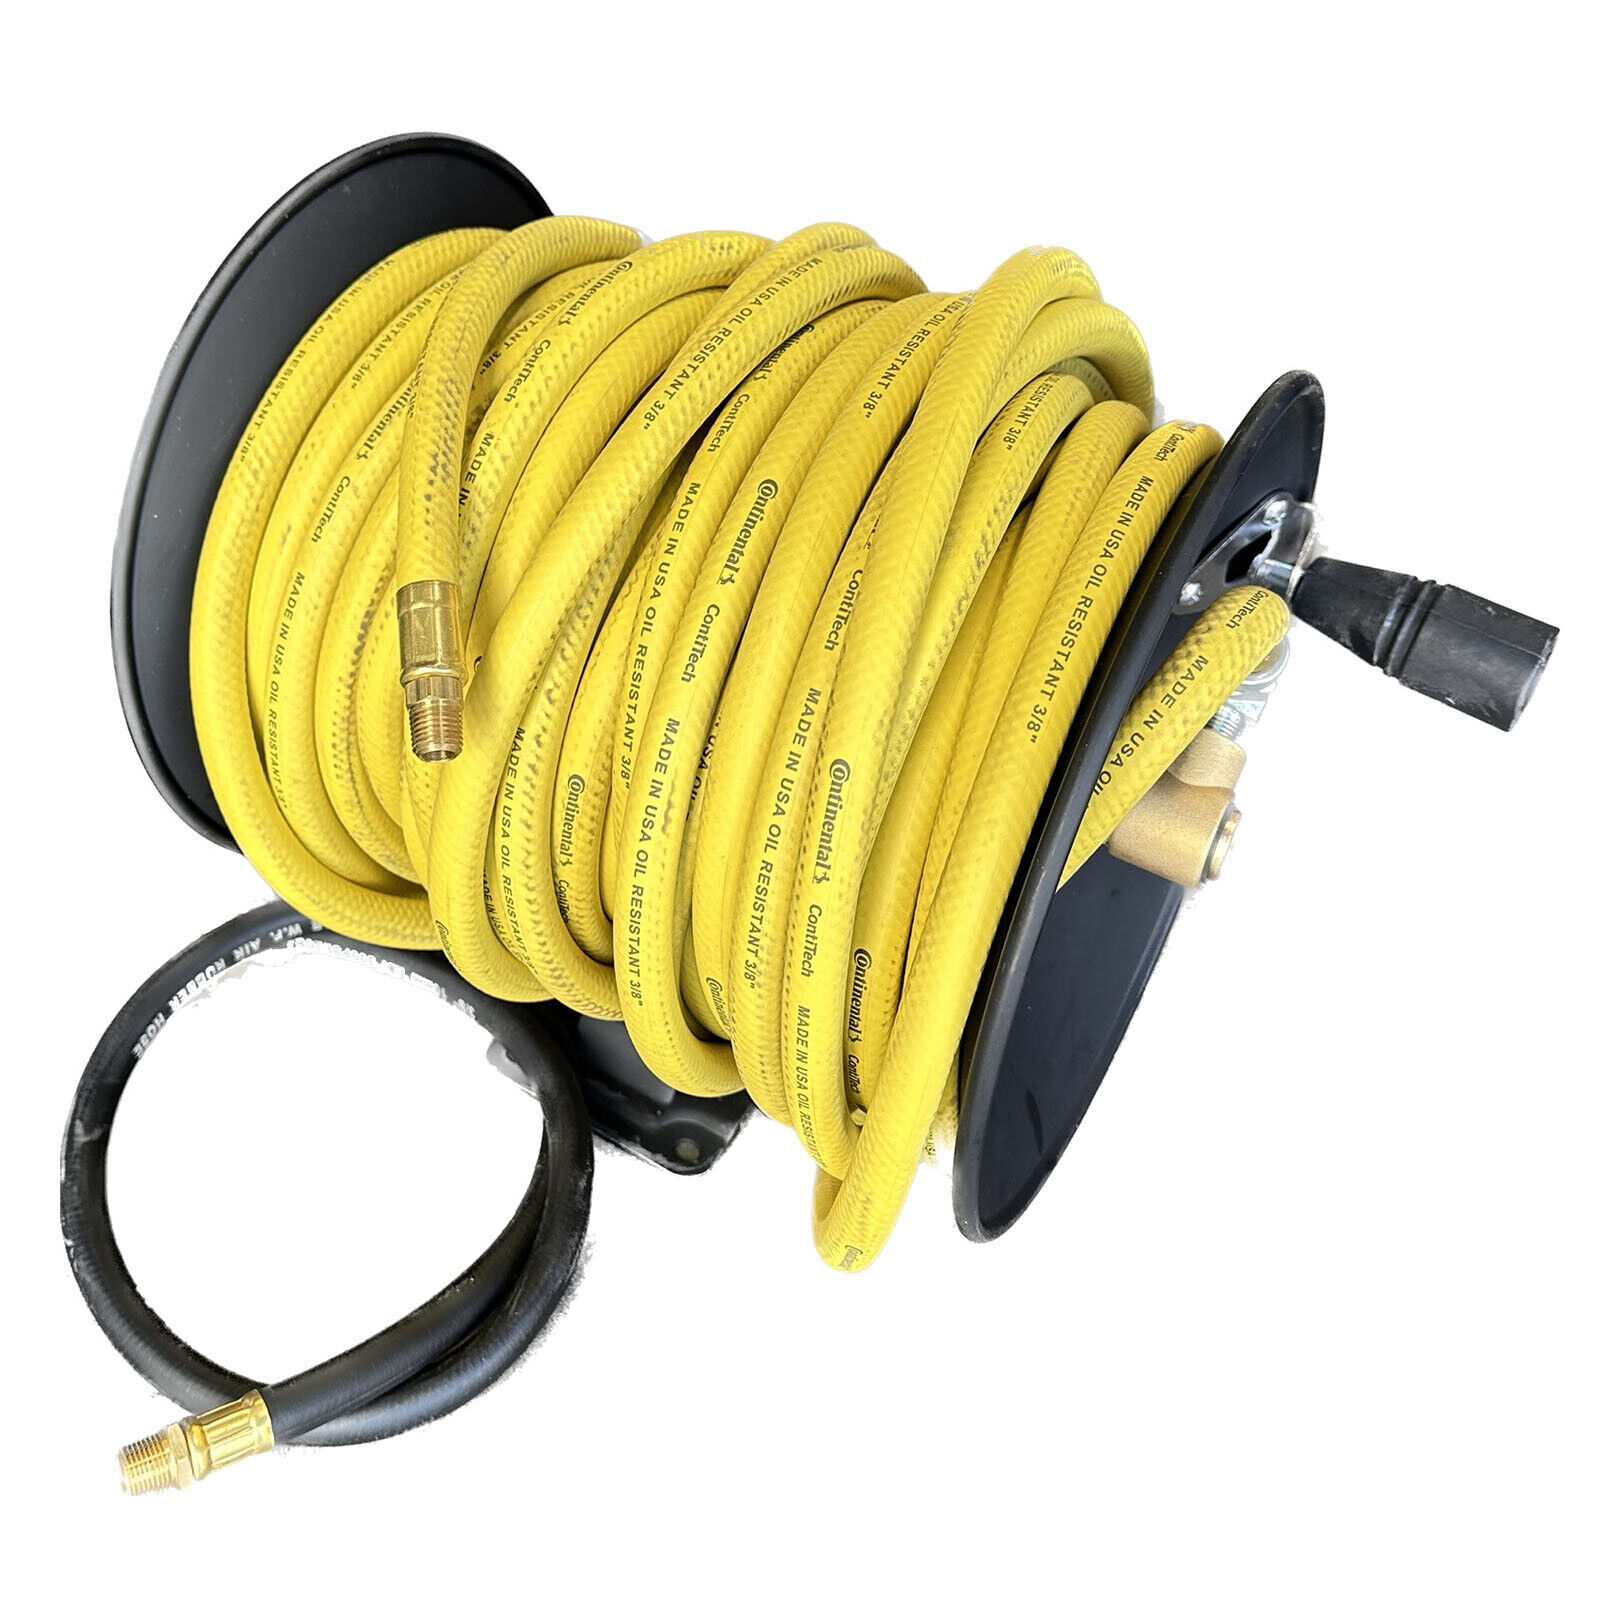 Hand Cranked Hose Reel ~ Manual rewind :: Up to 30m hose